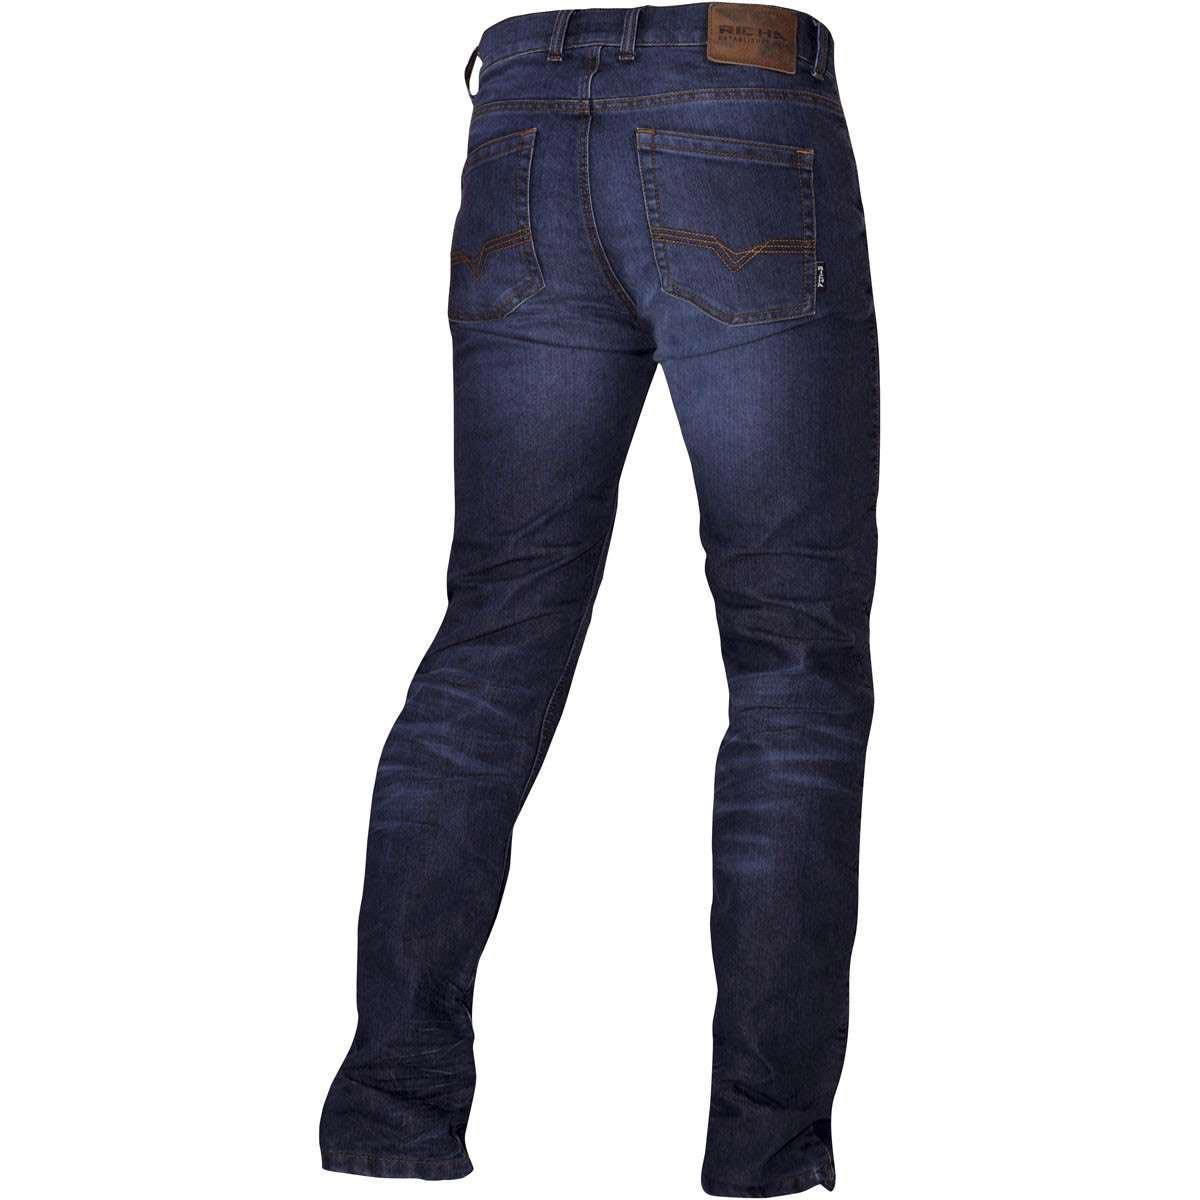 Richa Original Straight Cut Jeans 34in Leg  - Armoured Jeans